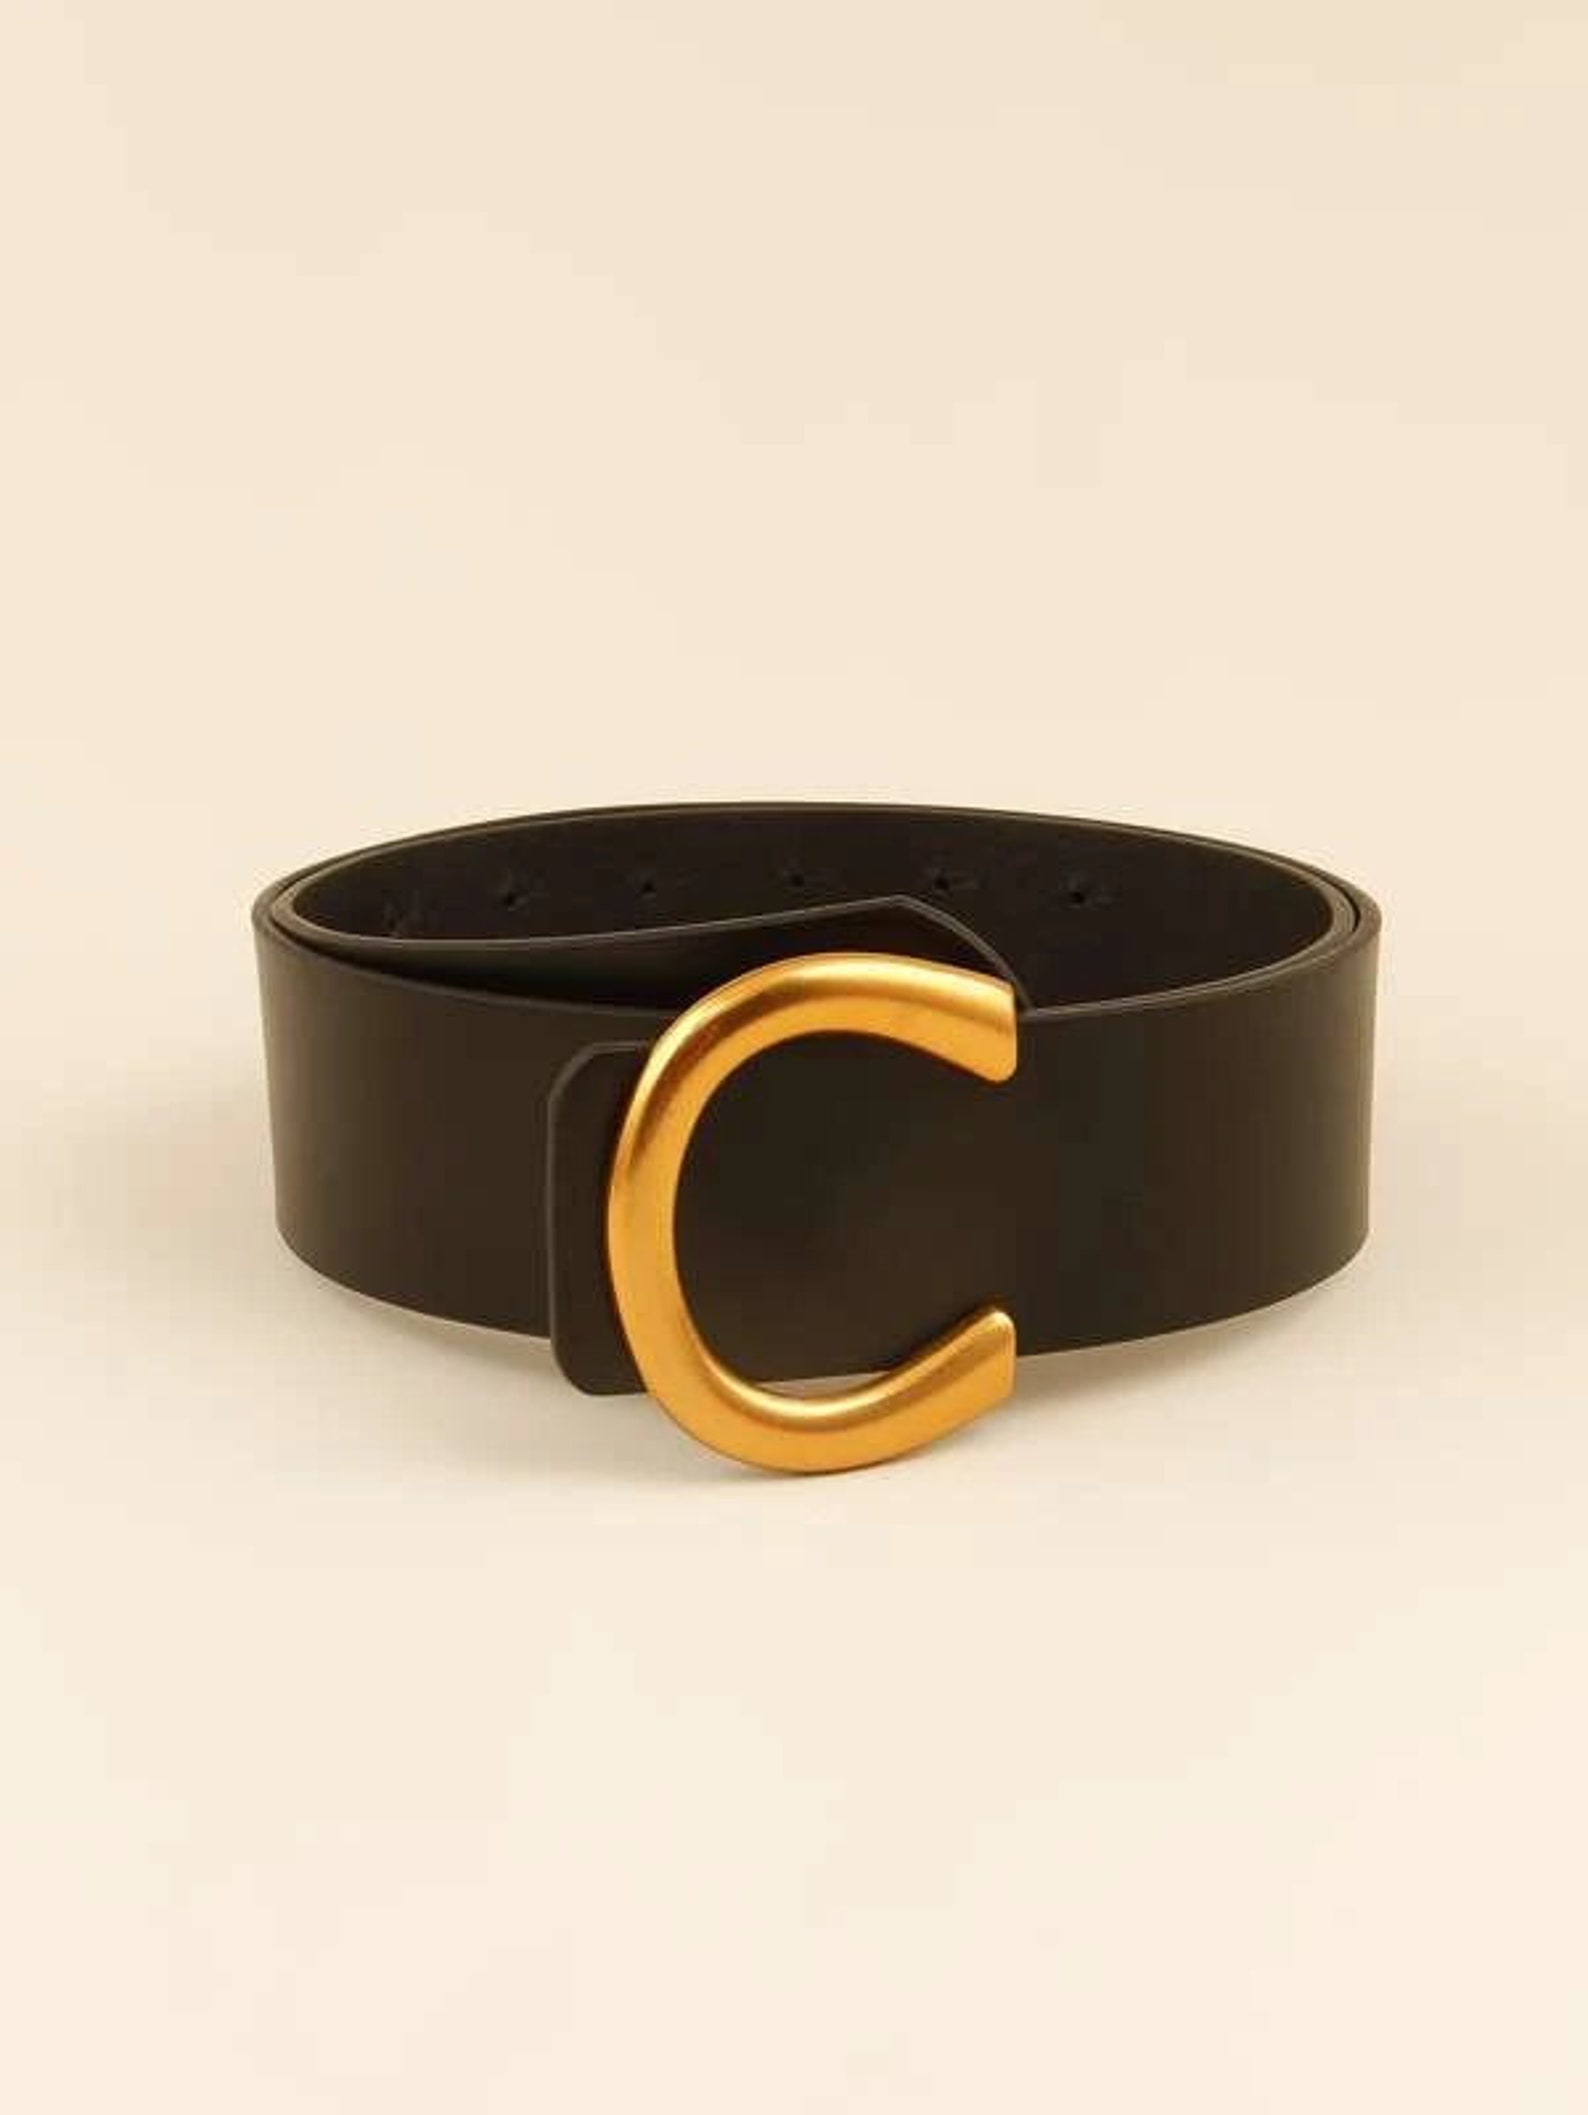 Black Leather Gold Buckle Belt Minimalist Wide Belt Black | Etsy